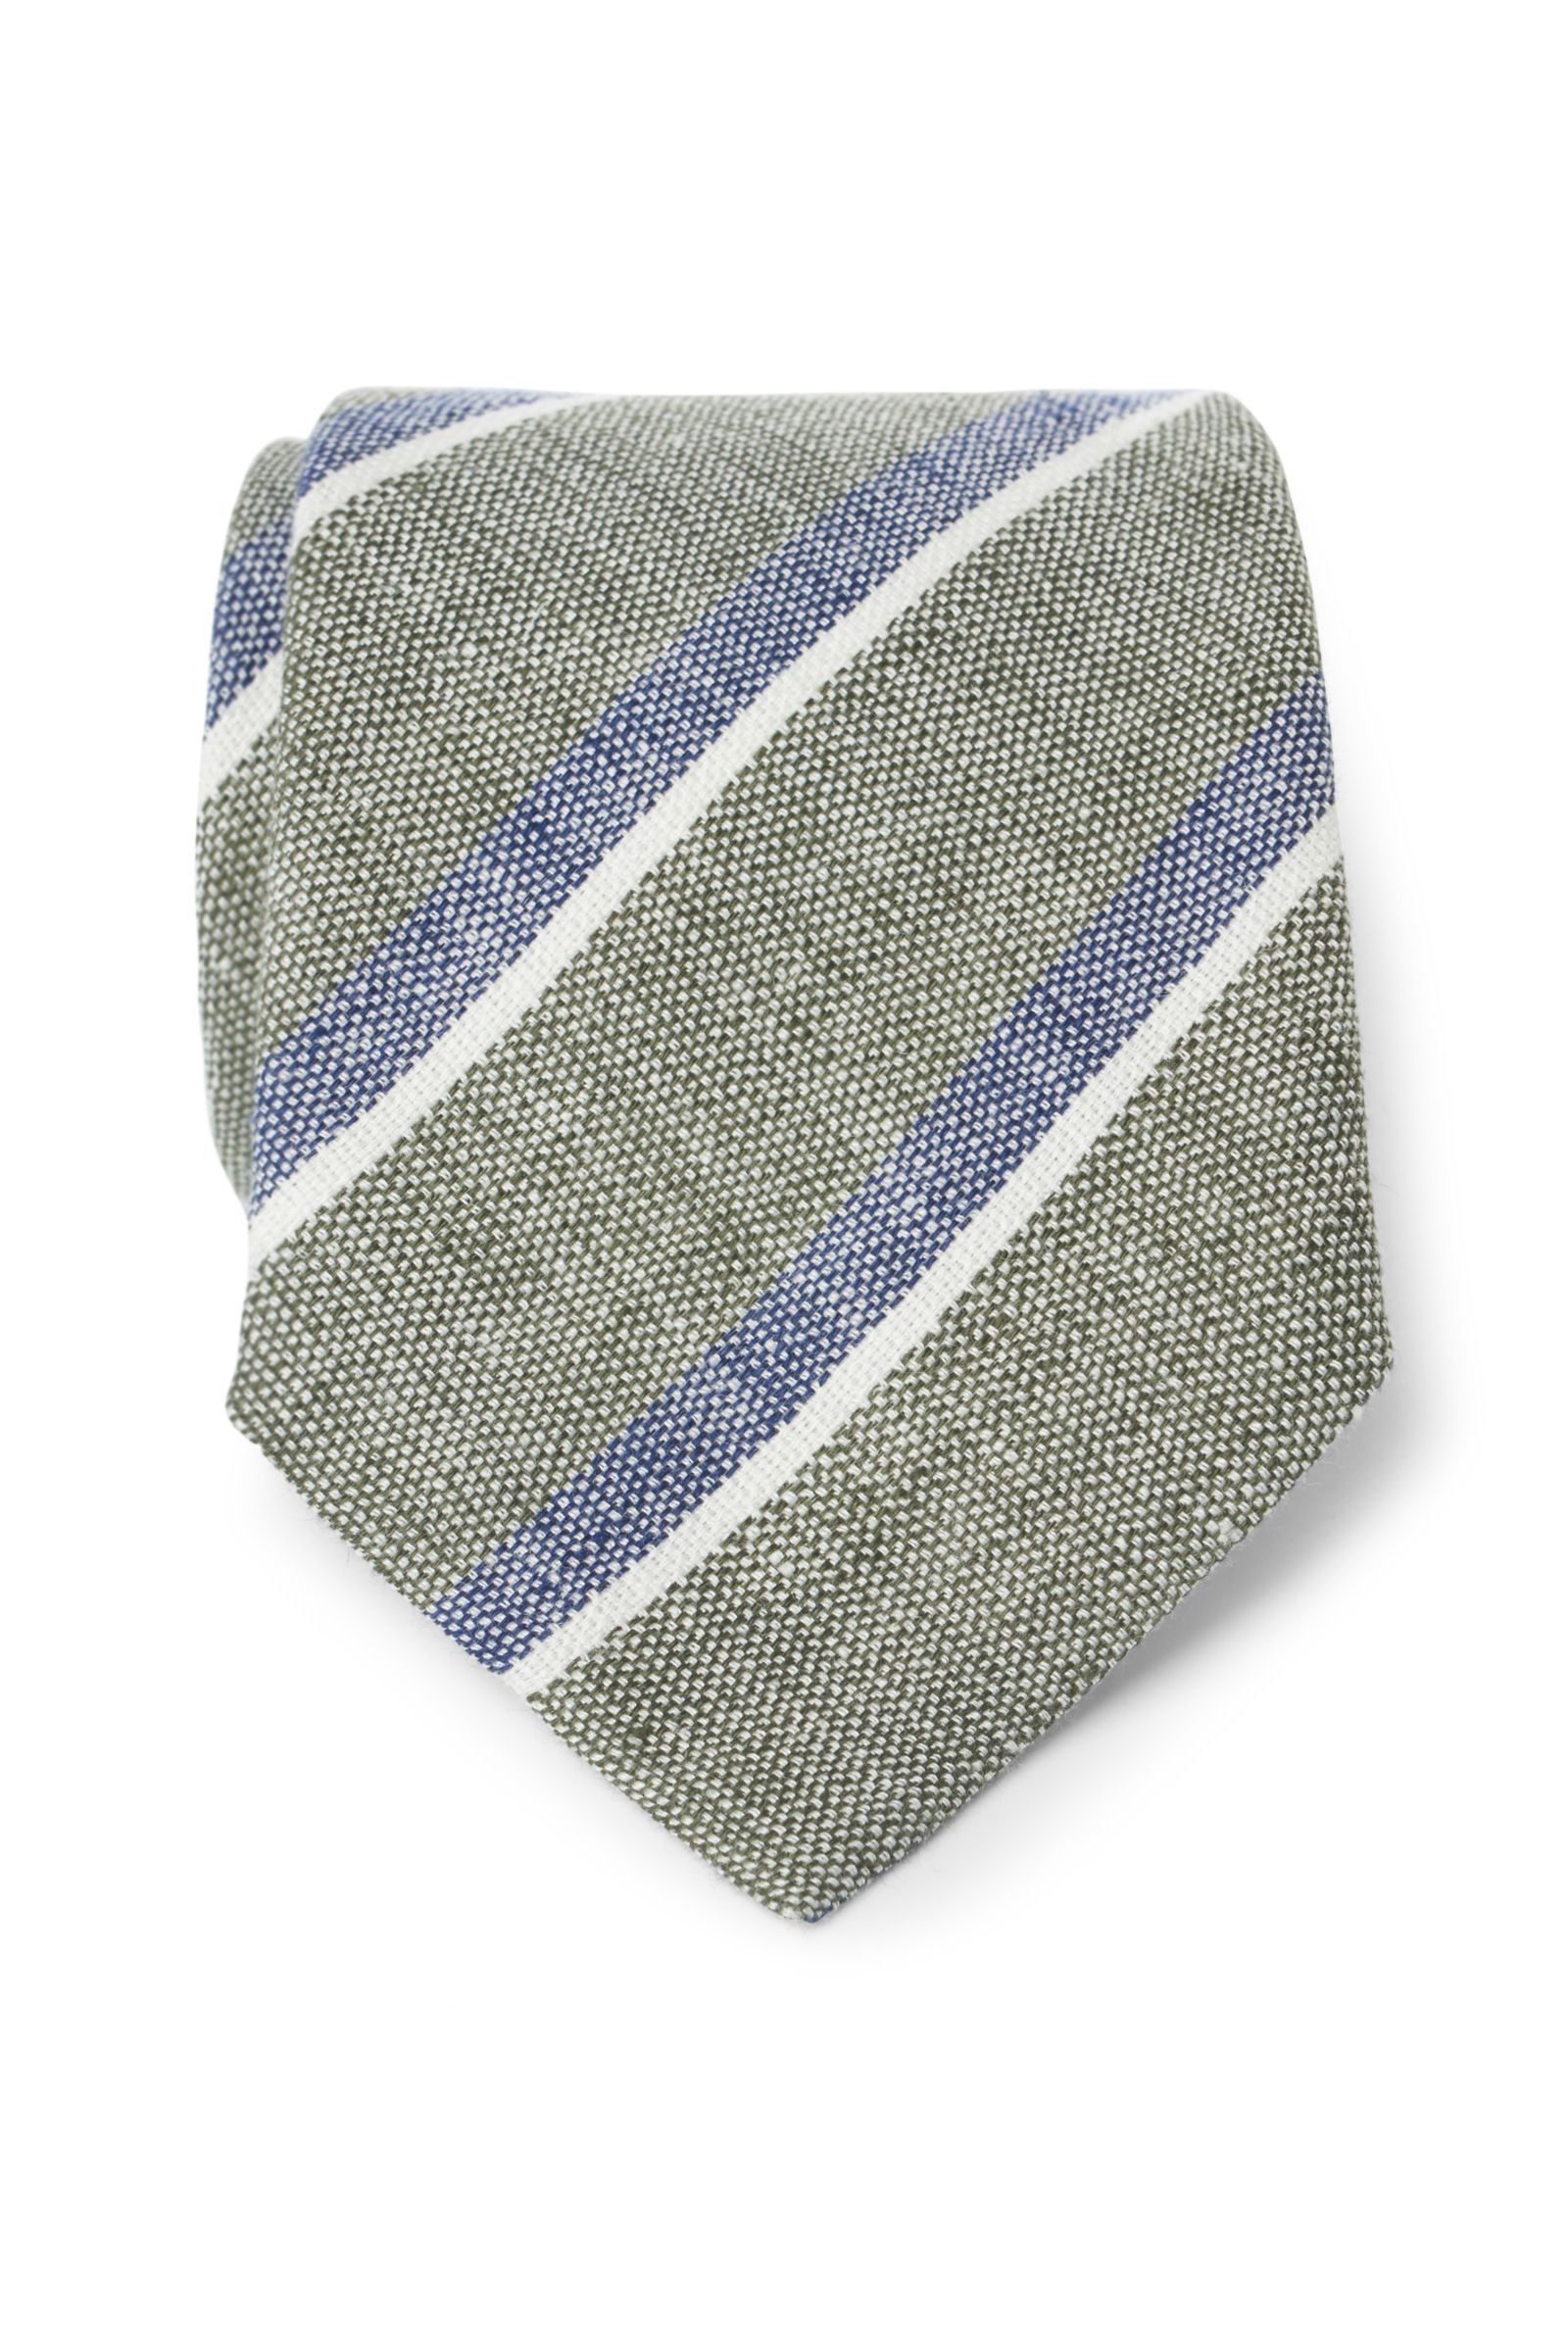 Linen tie olive striped